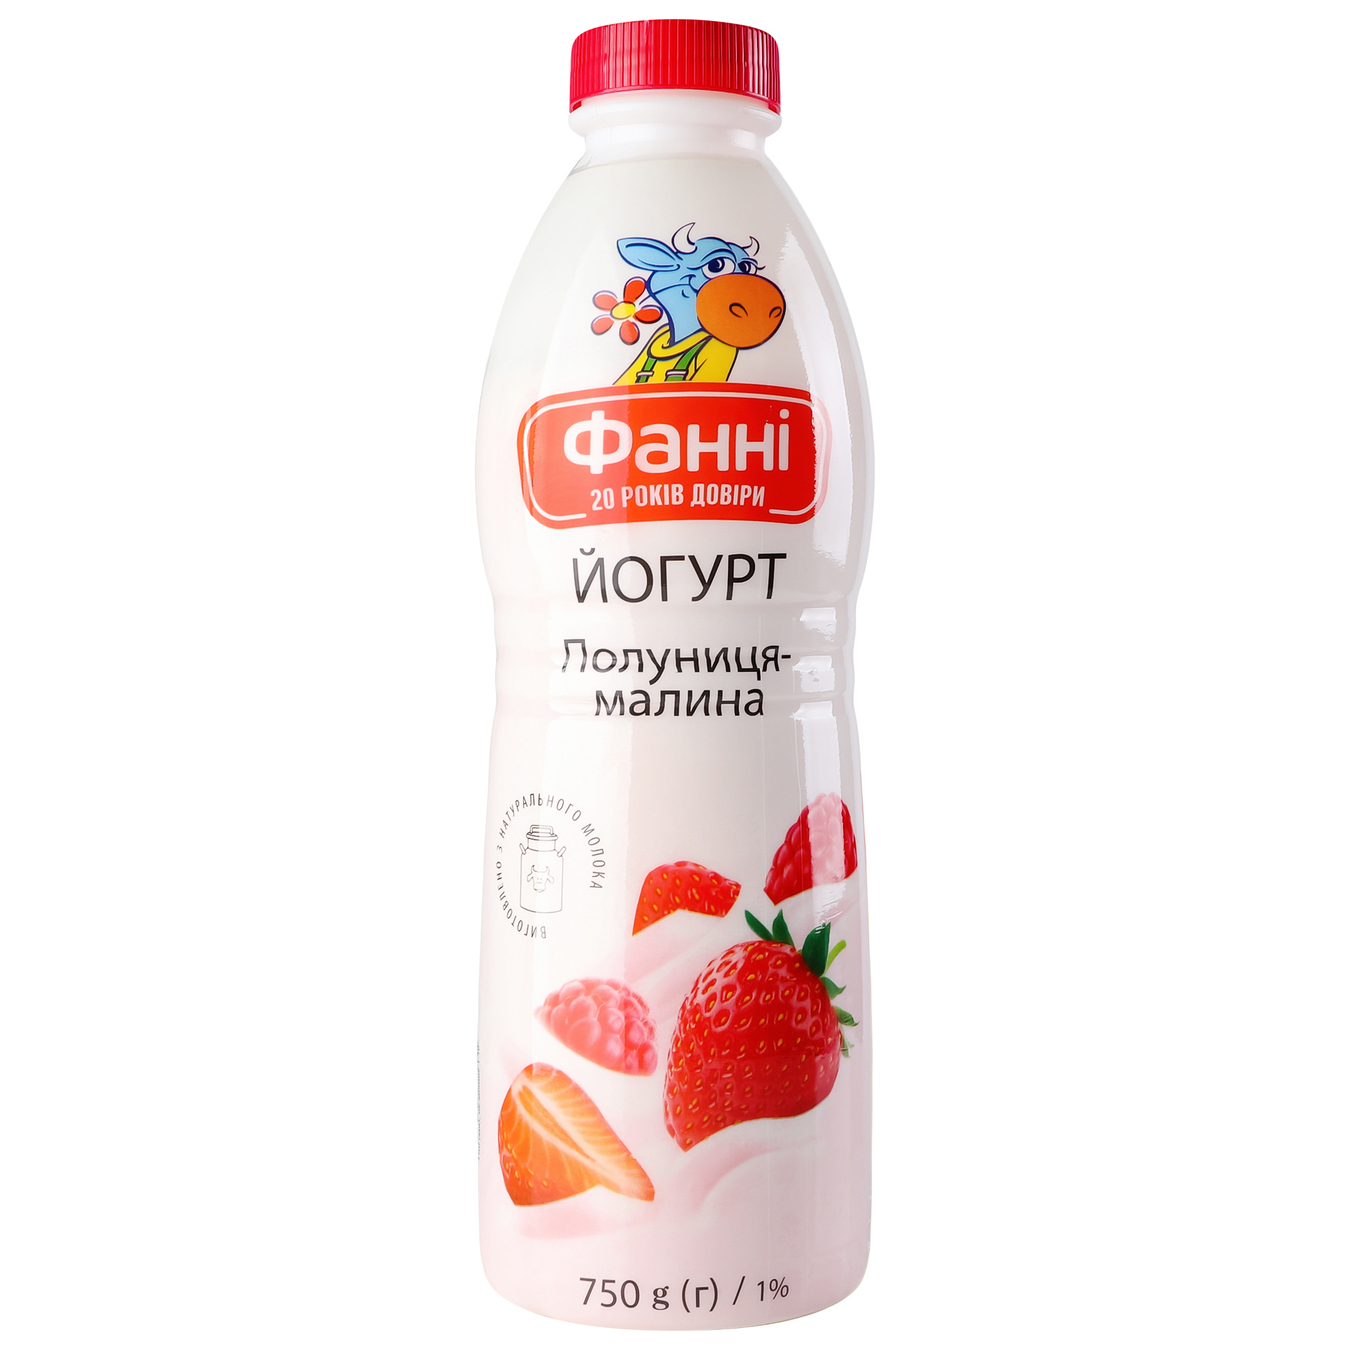 Fanny yogurt with strawberry-raspberry filling drinking bottle 1% 750g